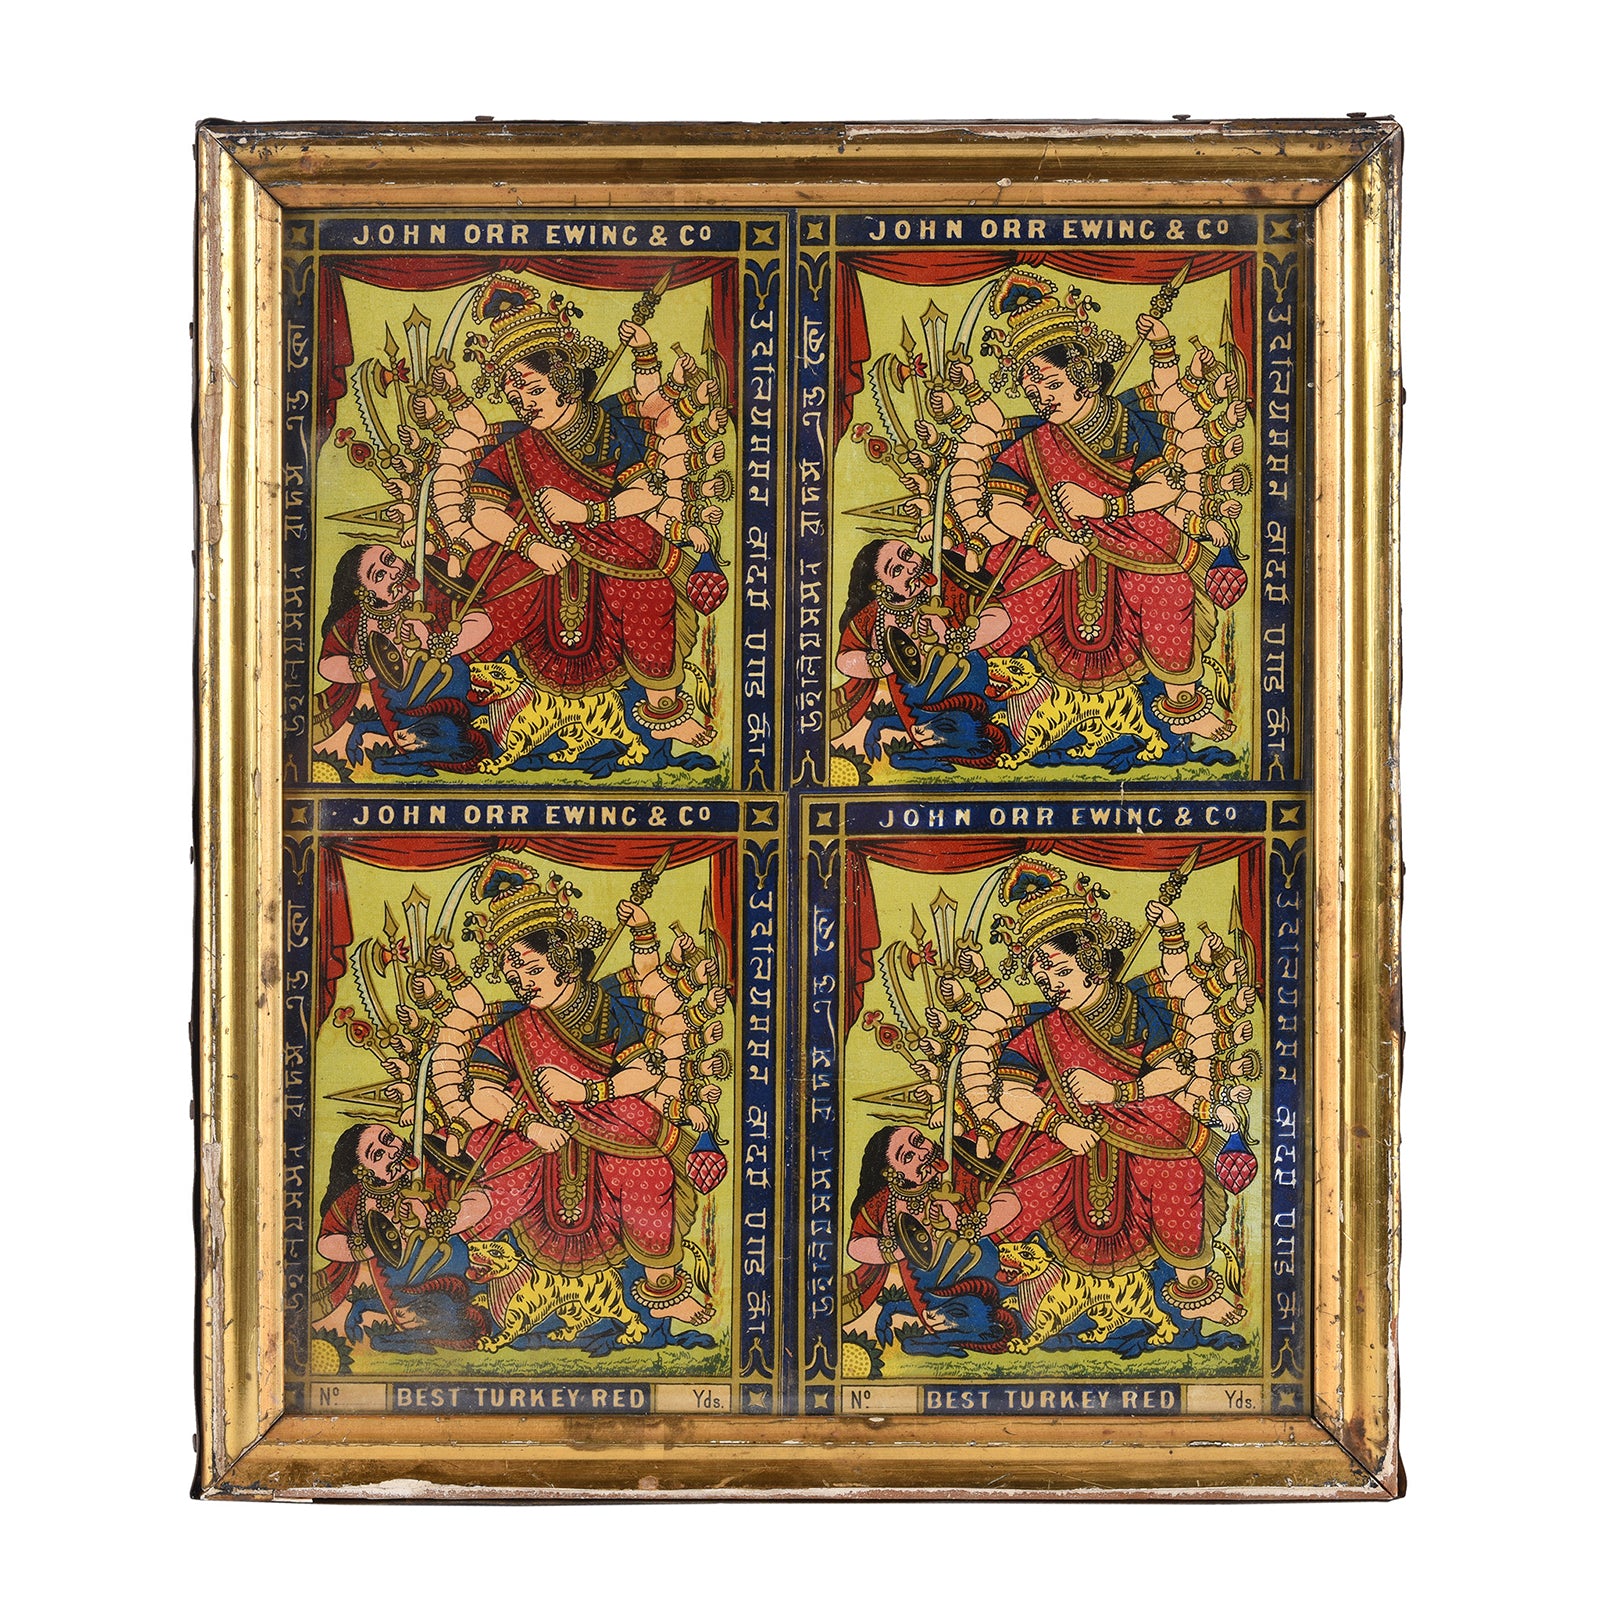 Framed 'John Orr Ewing & Co' Cotton Bale Advertising Chromolithograph Label - Featuring Durga | Indigo Antiques